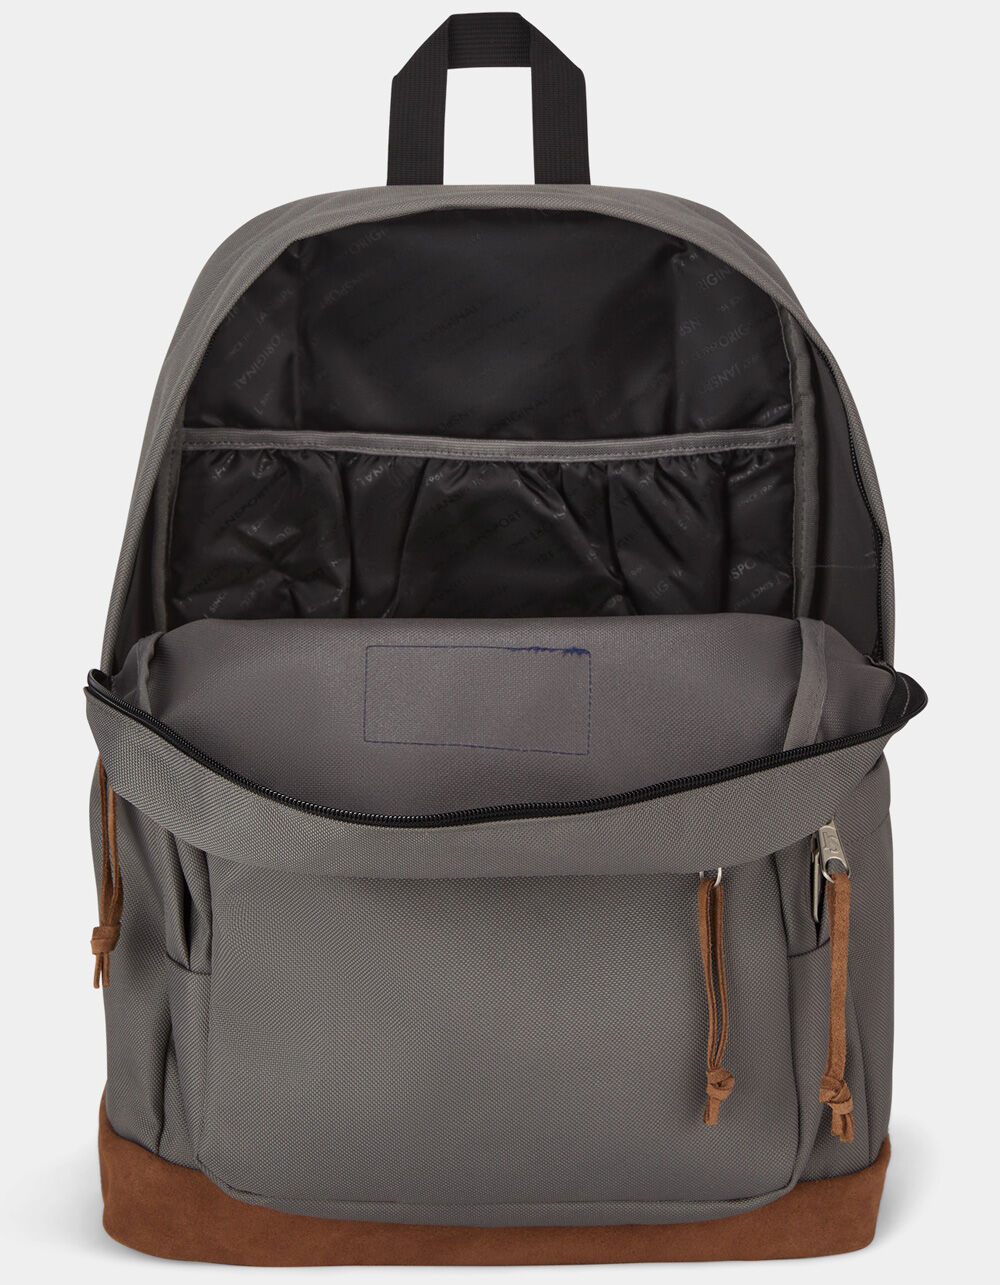 JANSPORT Right Pack Backpack - GRAY | Tillys